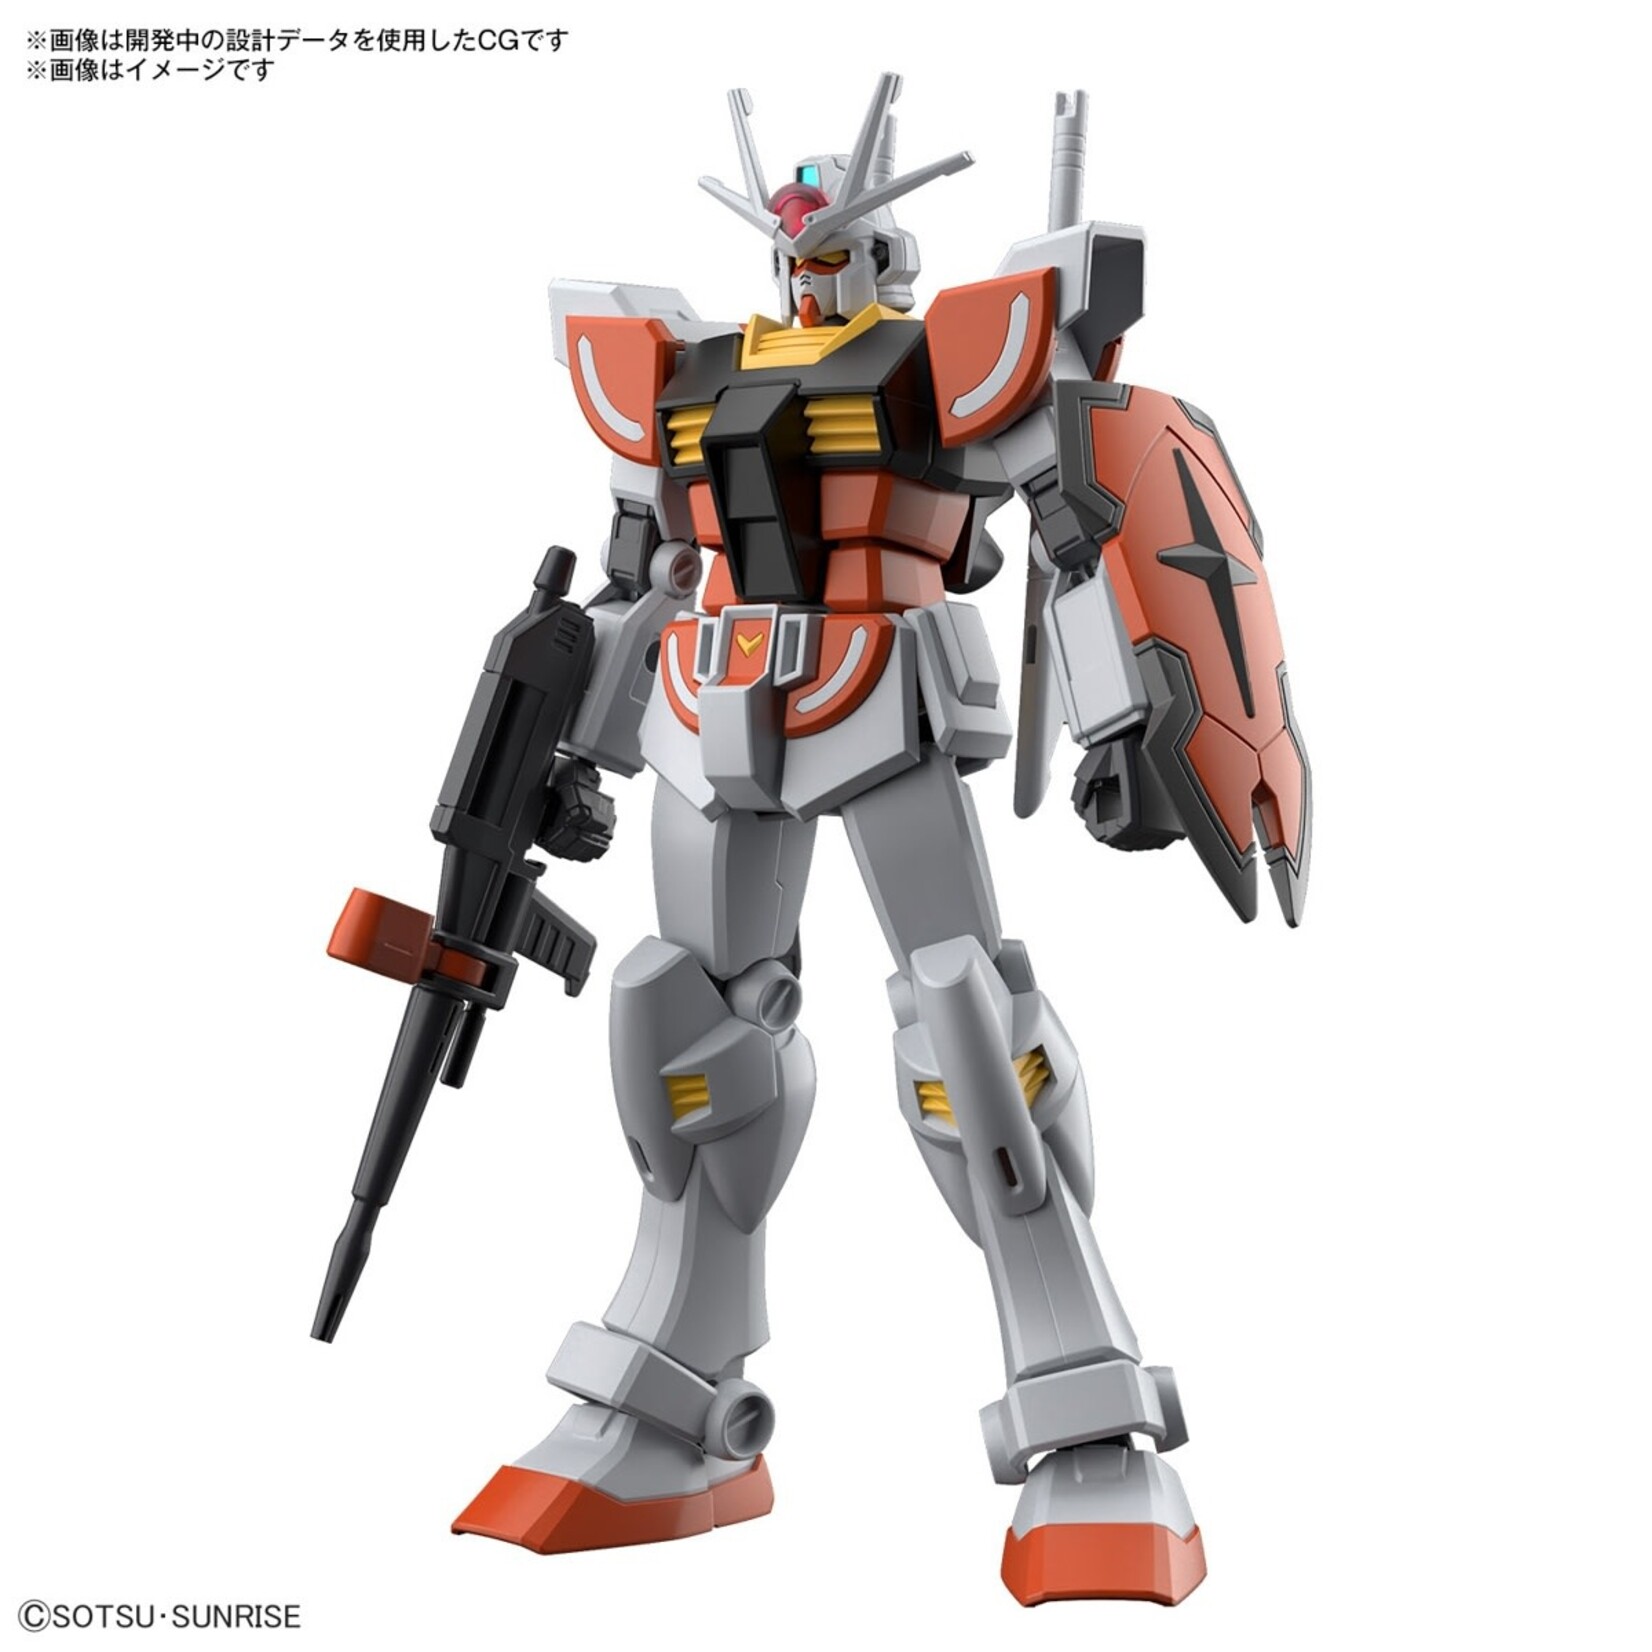 Bandai Bandai 2673910 Entry Grade #1 LAH Gundam "Gundam Build Metaverse" HGBF